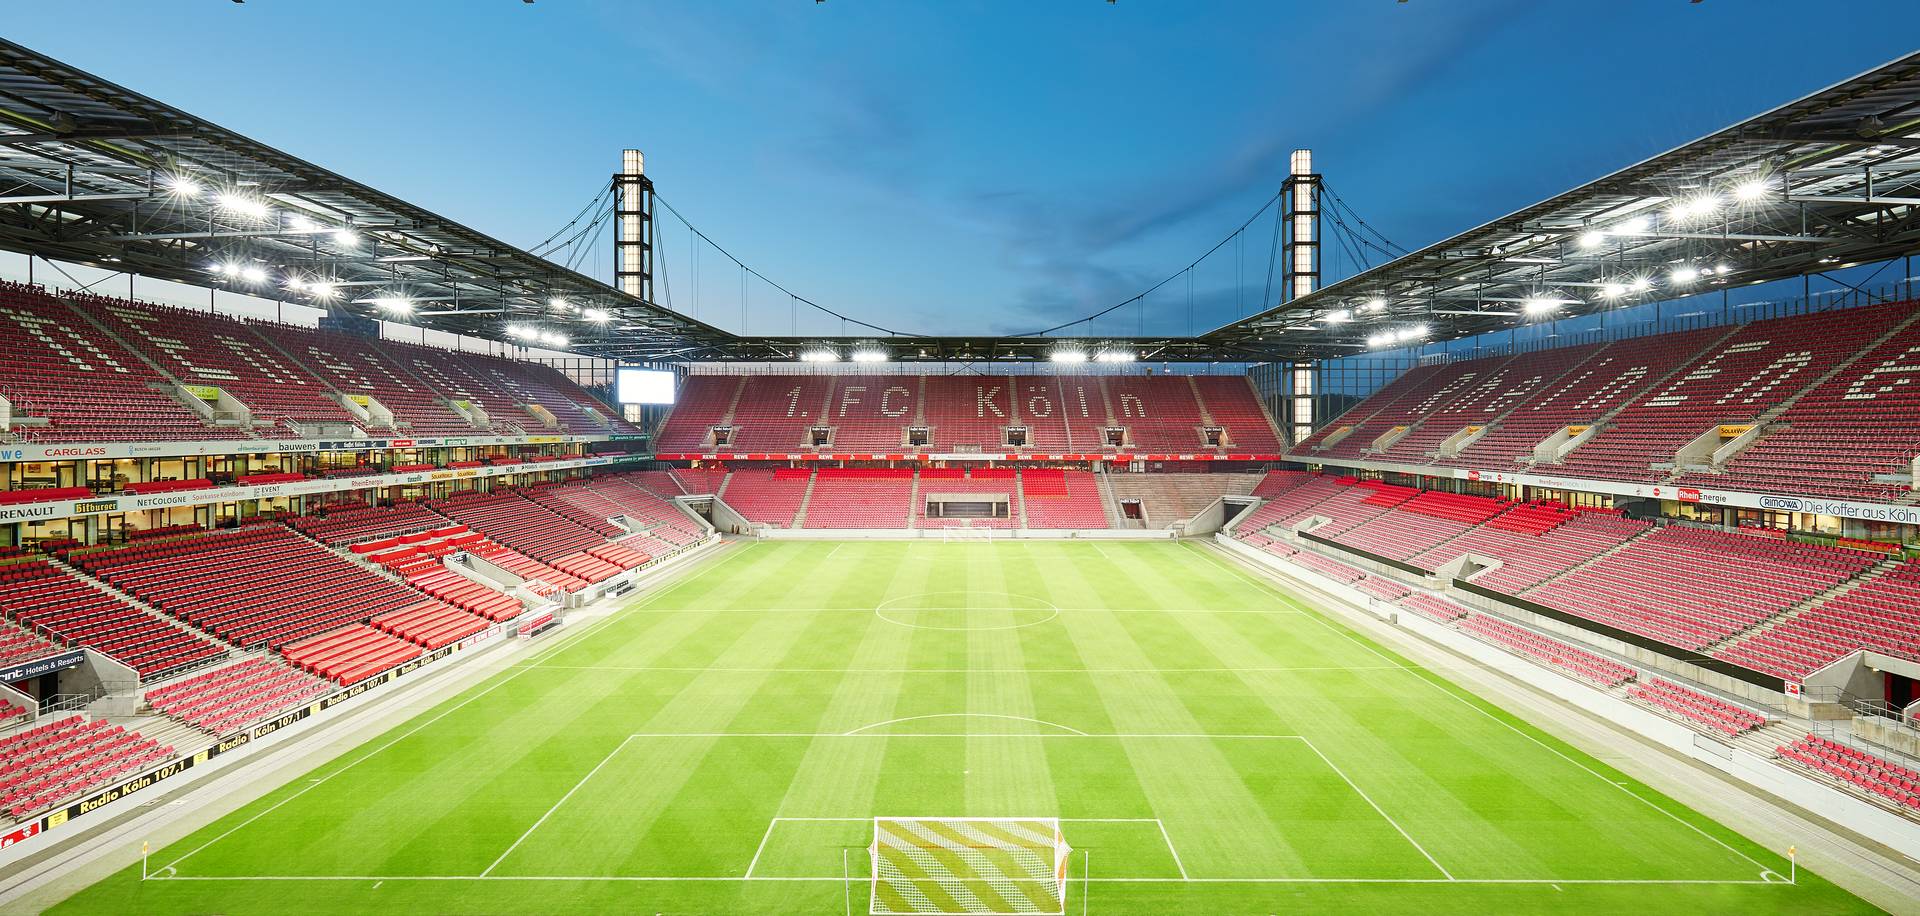 60 x 40 1 FC Köln LED-Bild Stadion RheinEnergieStadion 